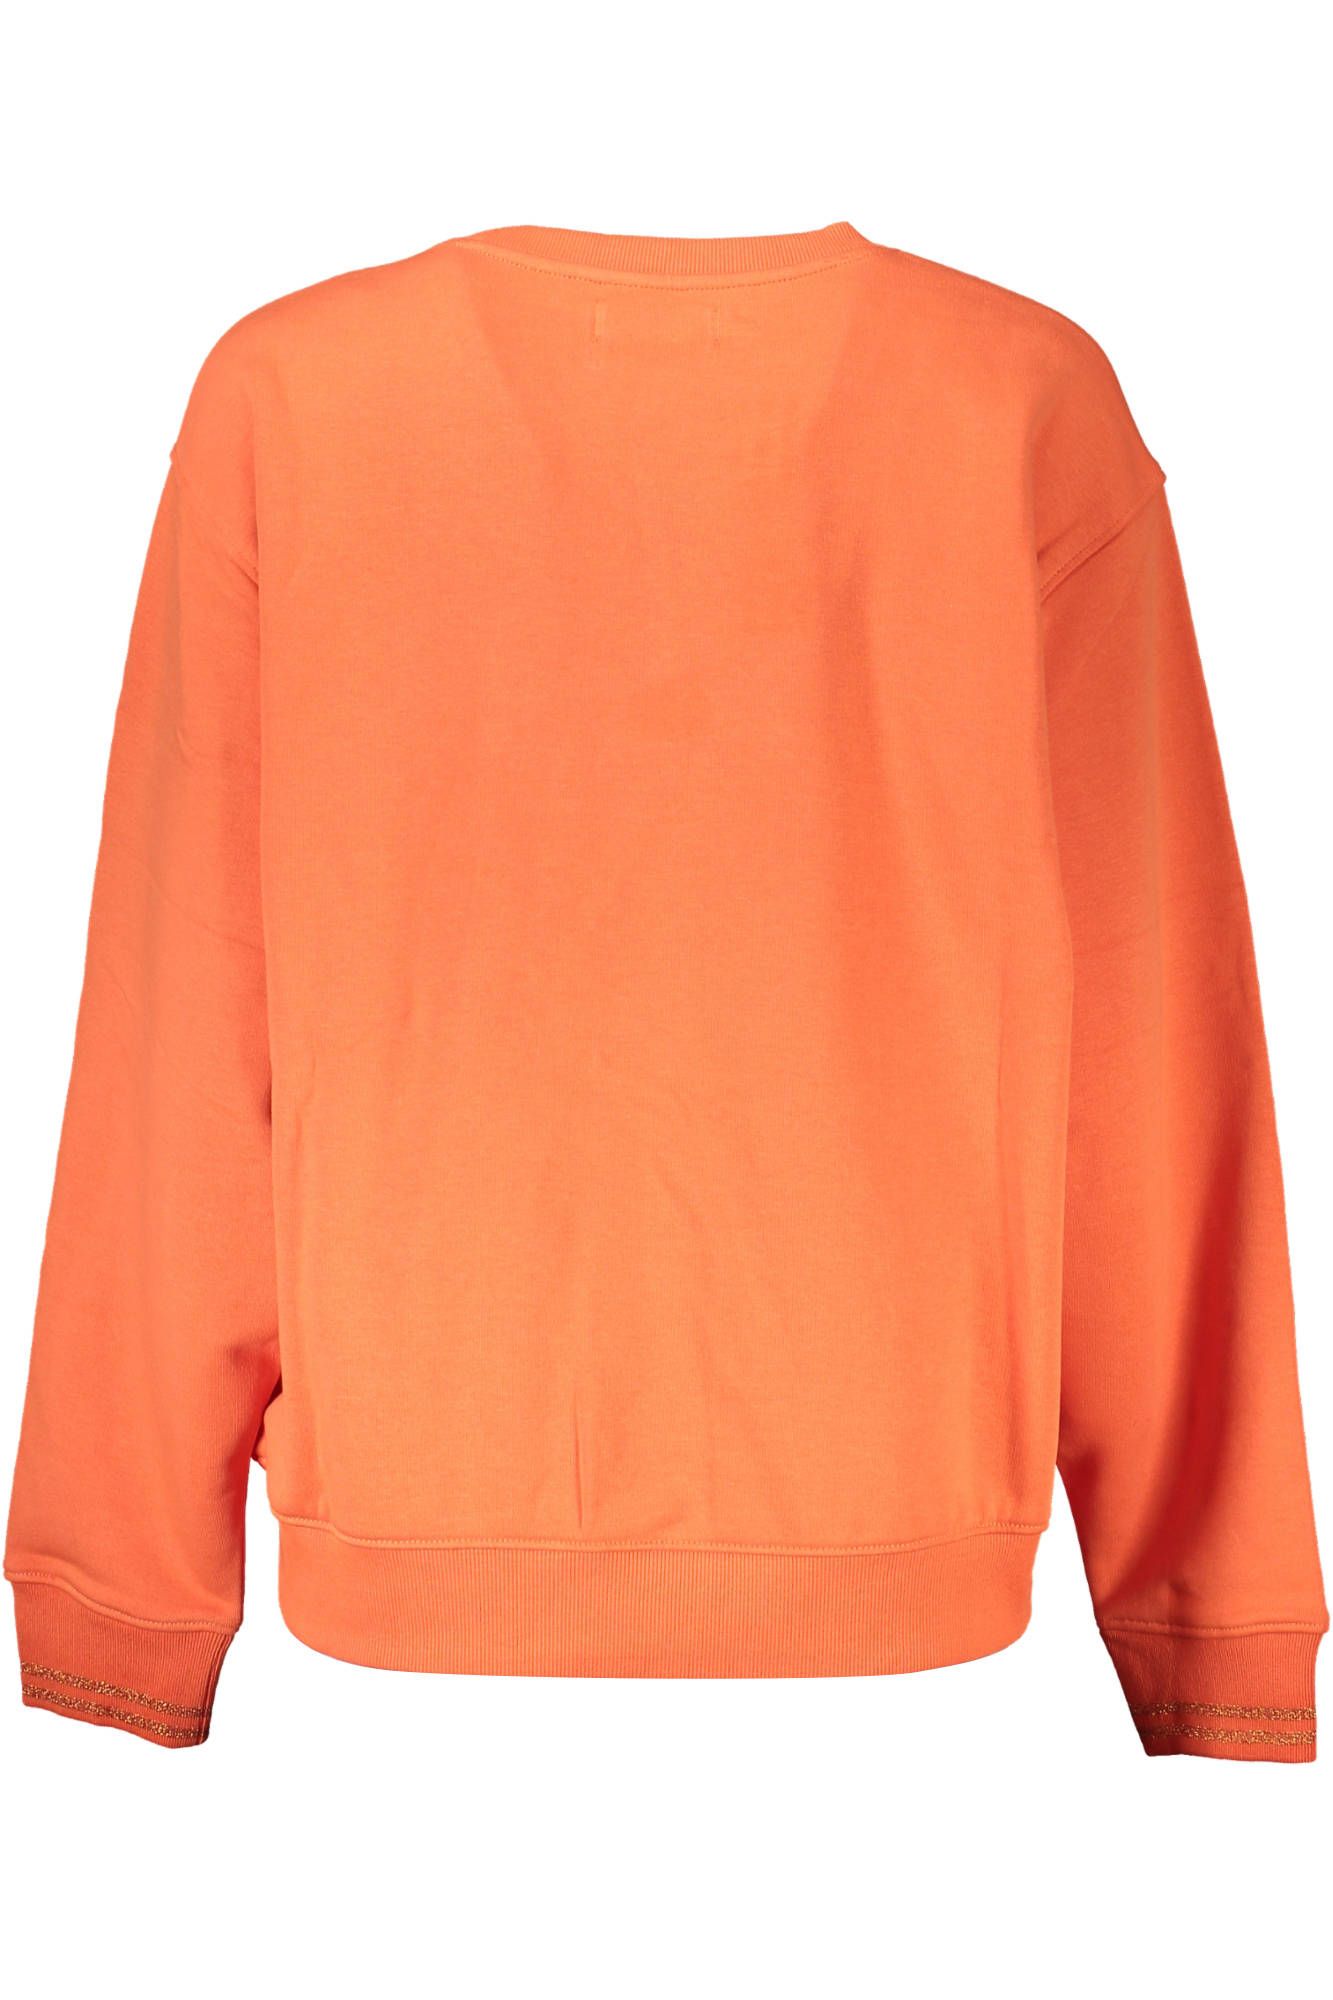 Desigual Orange Cotton Sweater